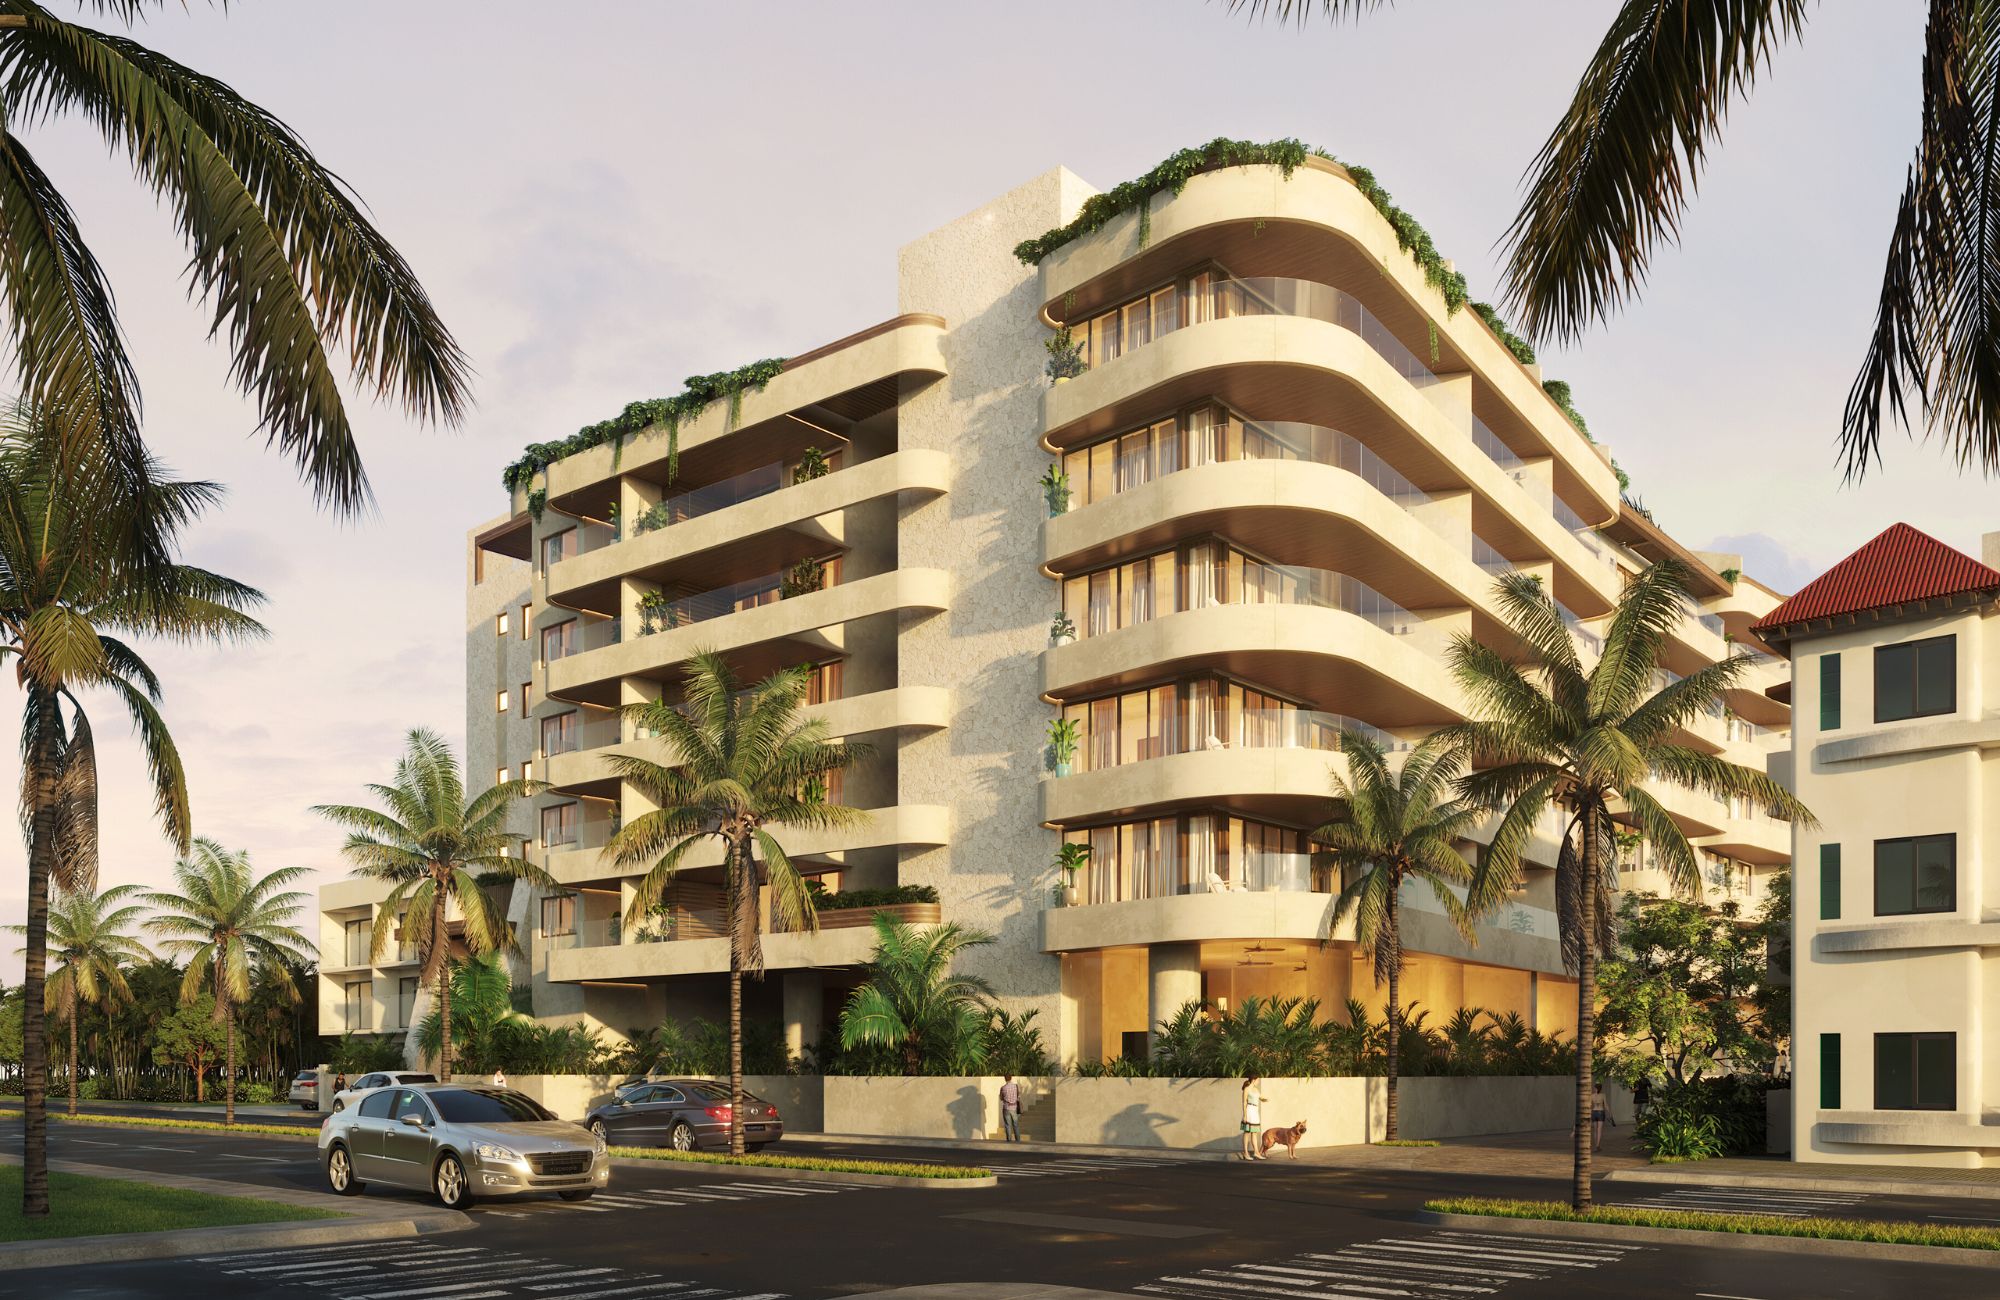 Sea view condominium with terrace, private Jacuzzi, pre-construction, for sale in Puerto Morelos.